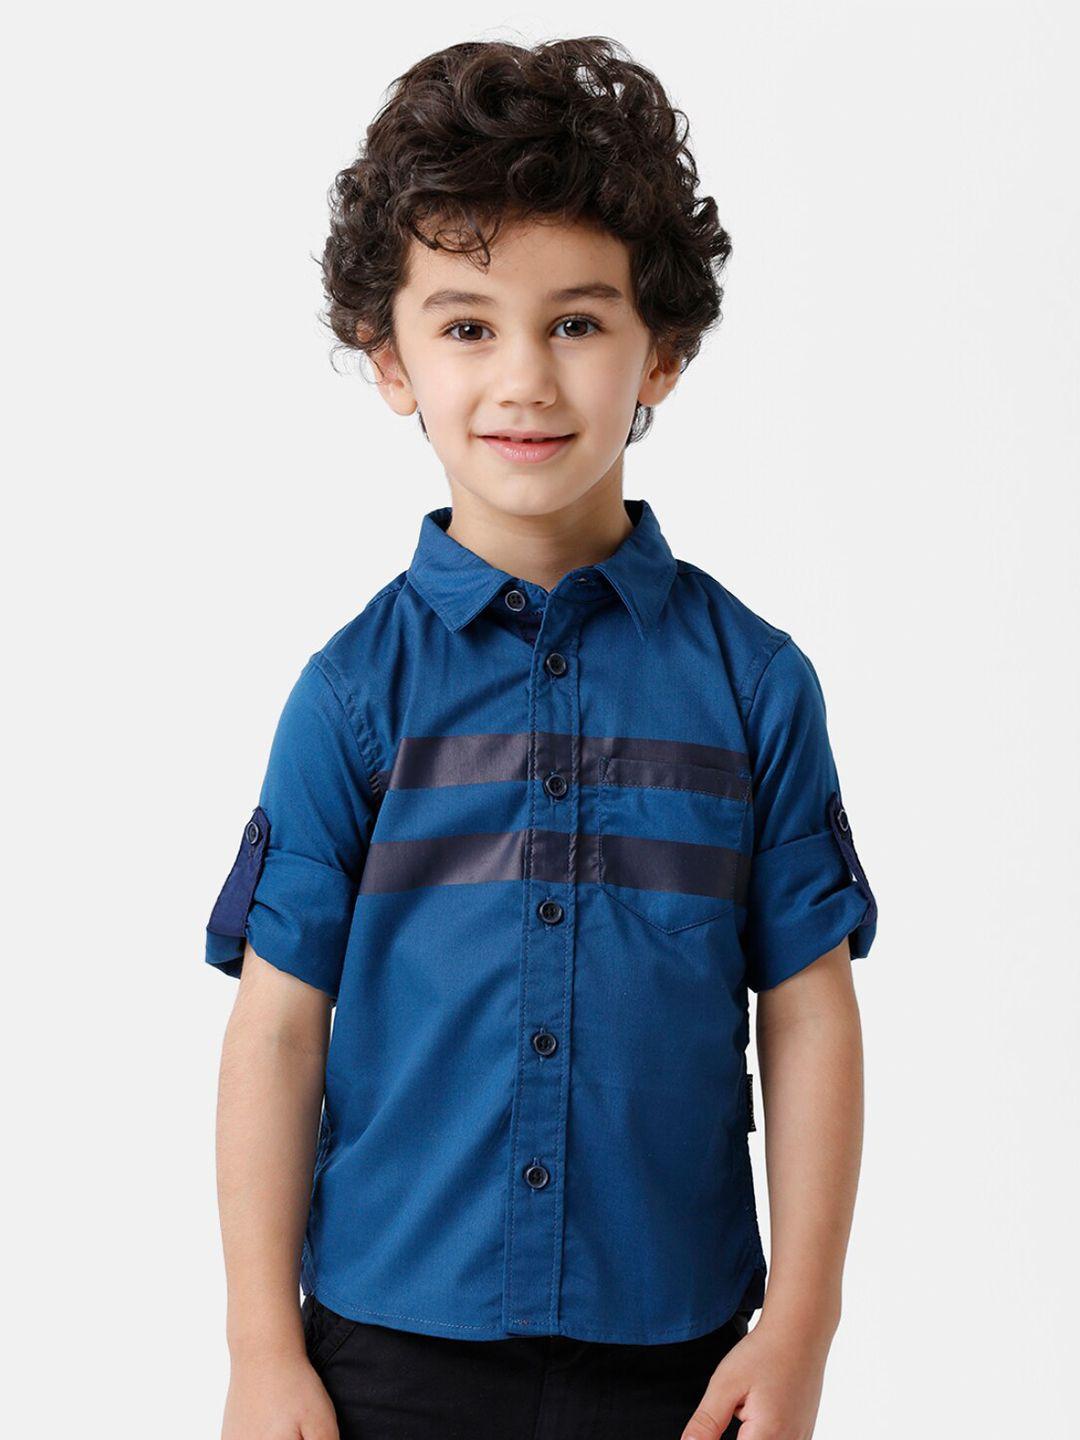 kate & oscar boys navy blue standard casual shirt